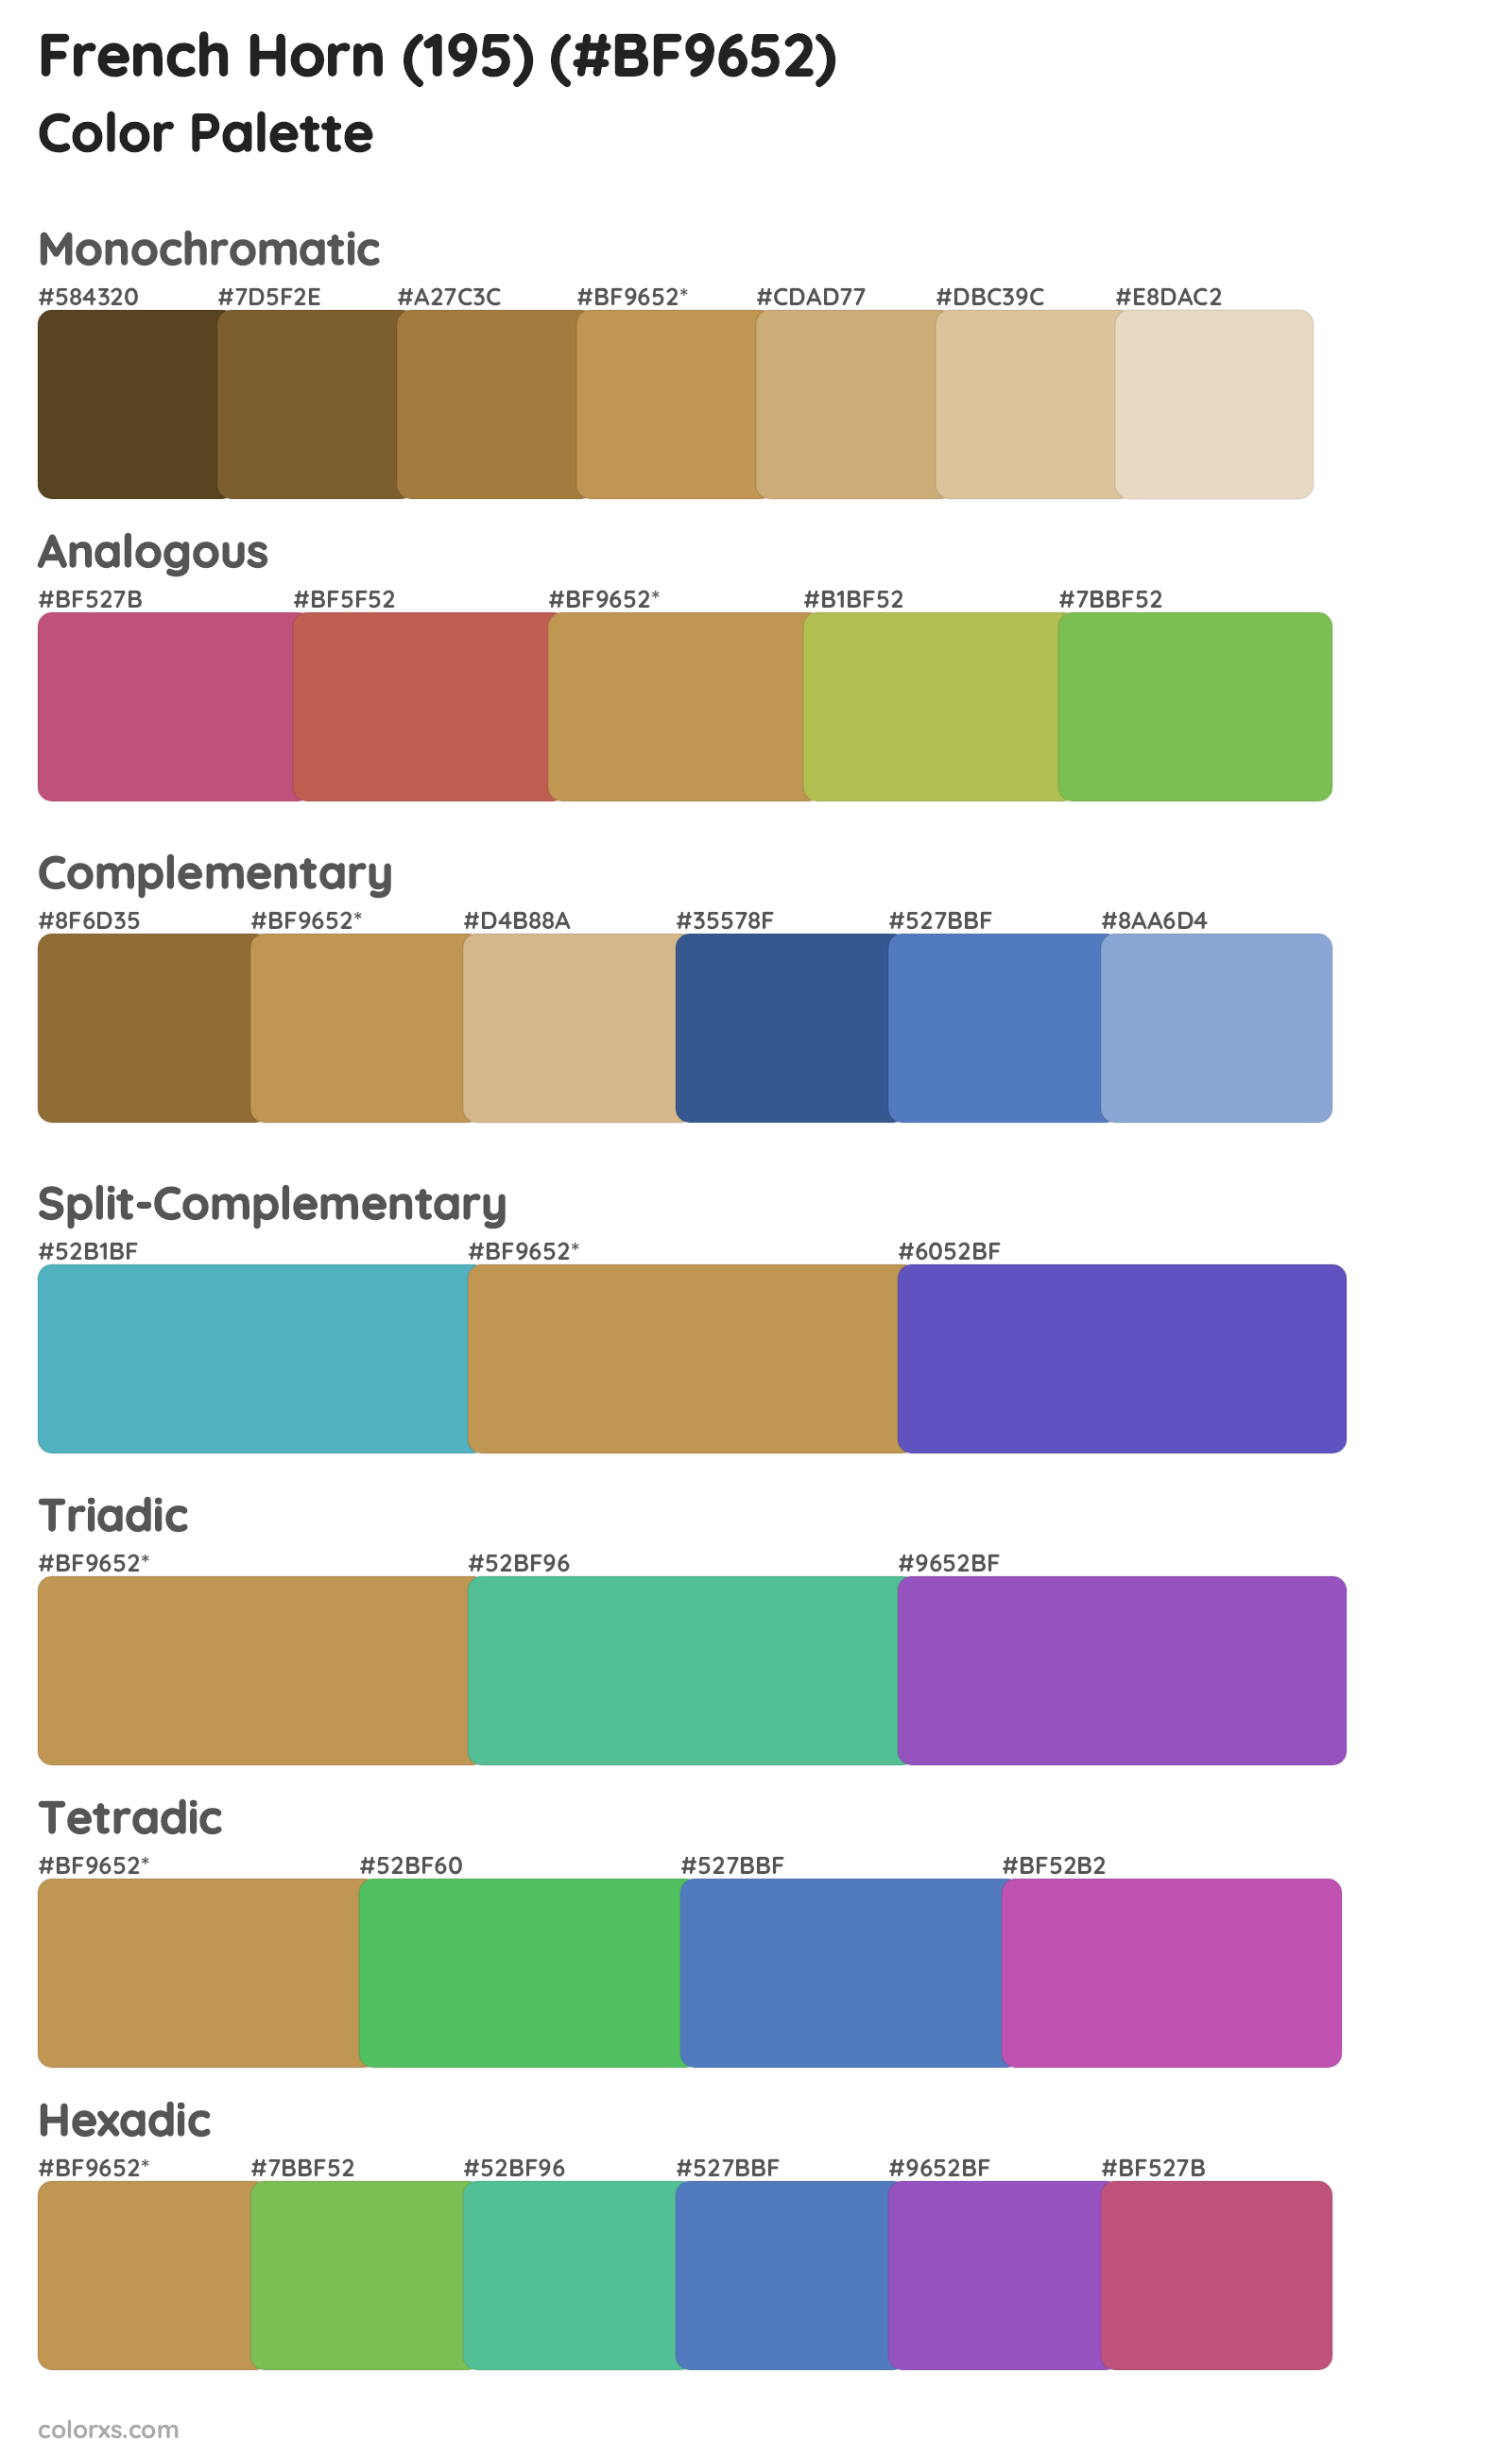 French Horn (195) Color Scheme Palettes